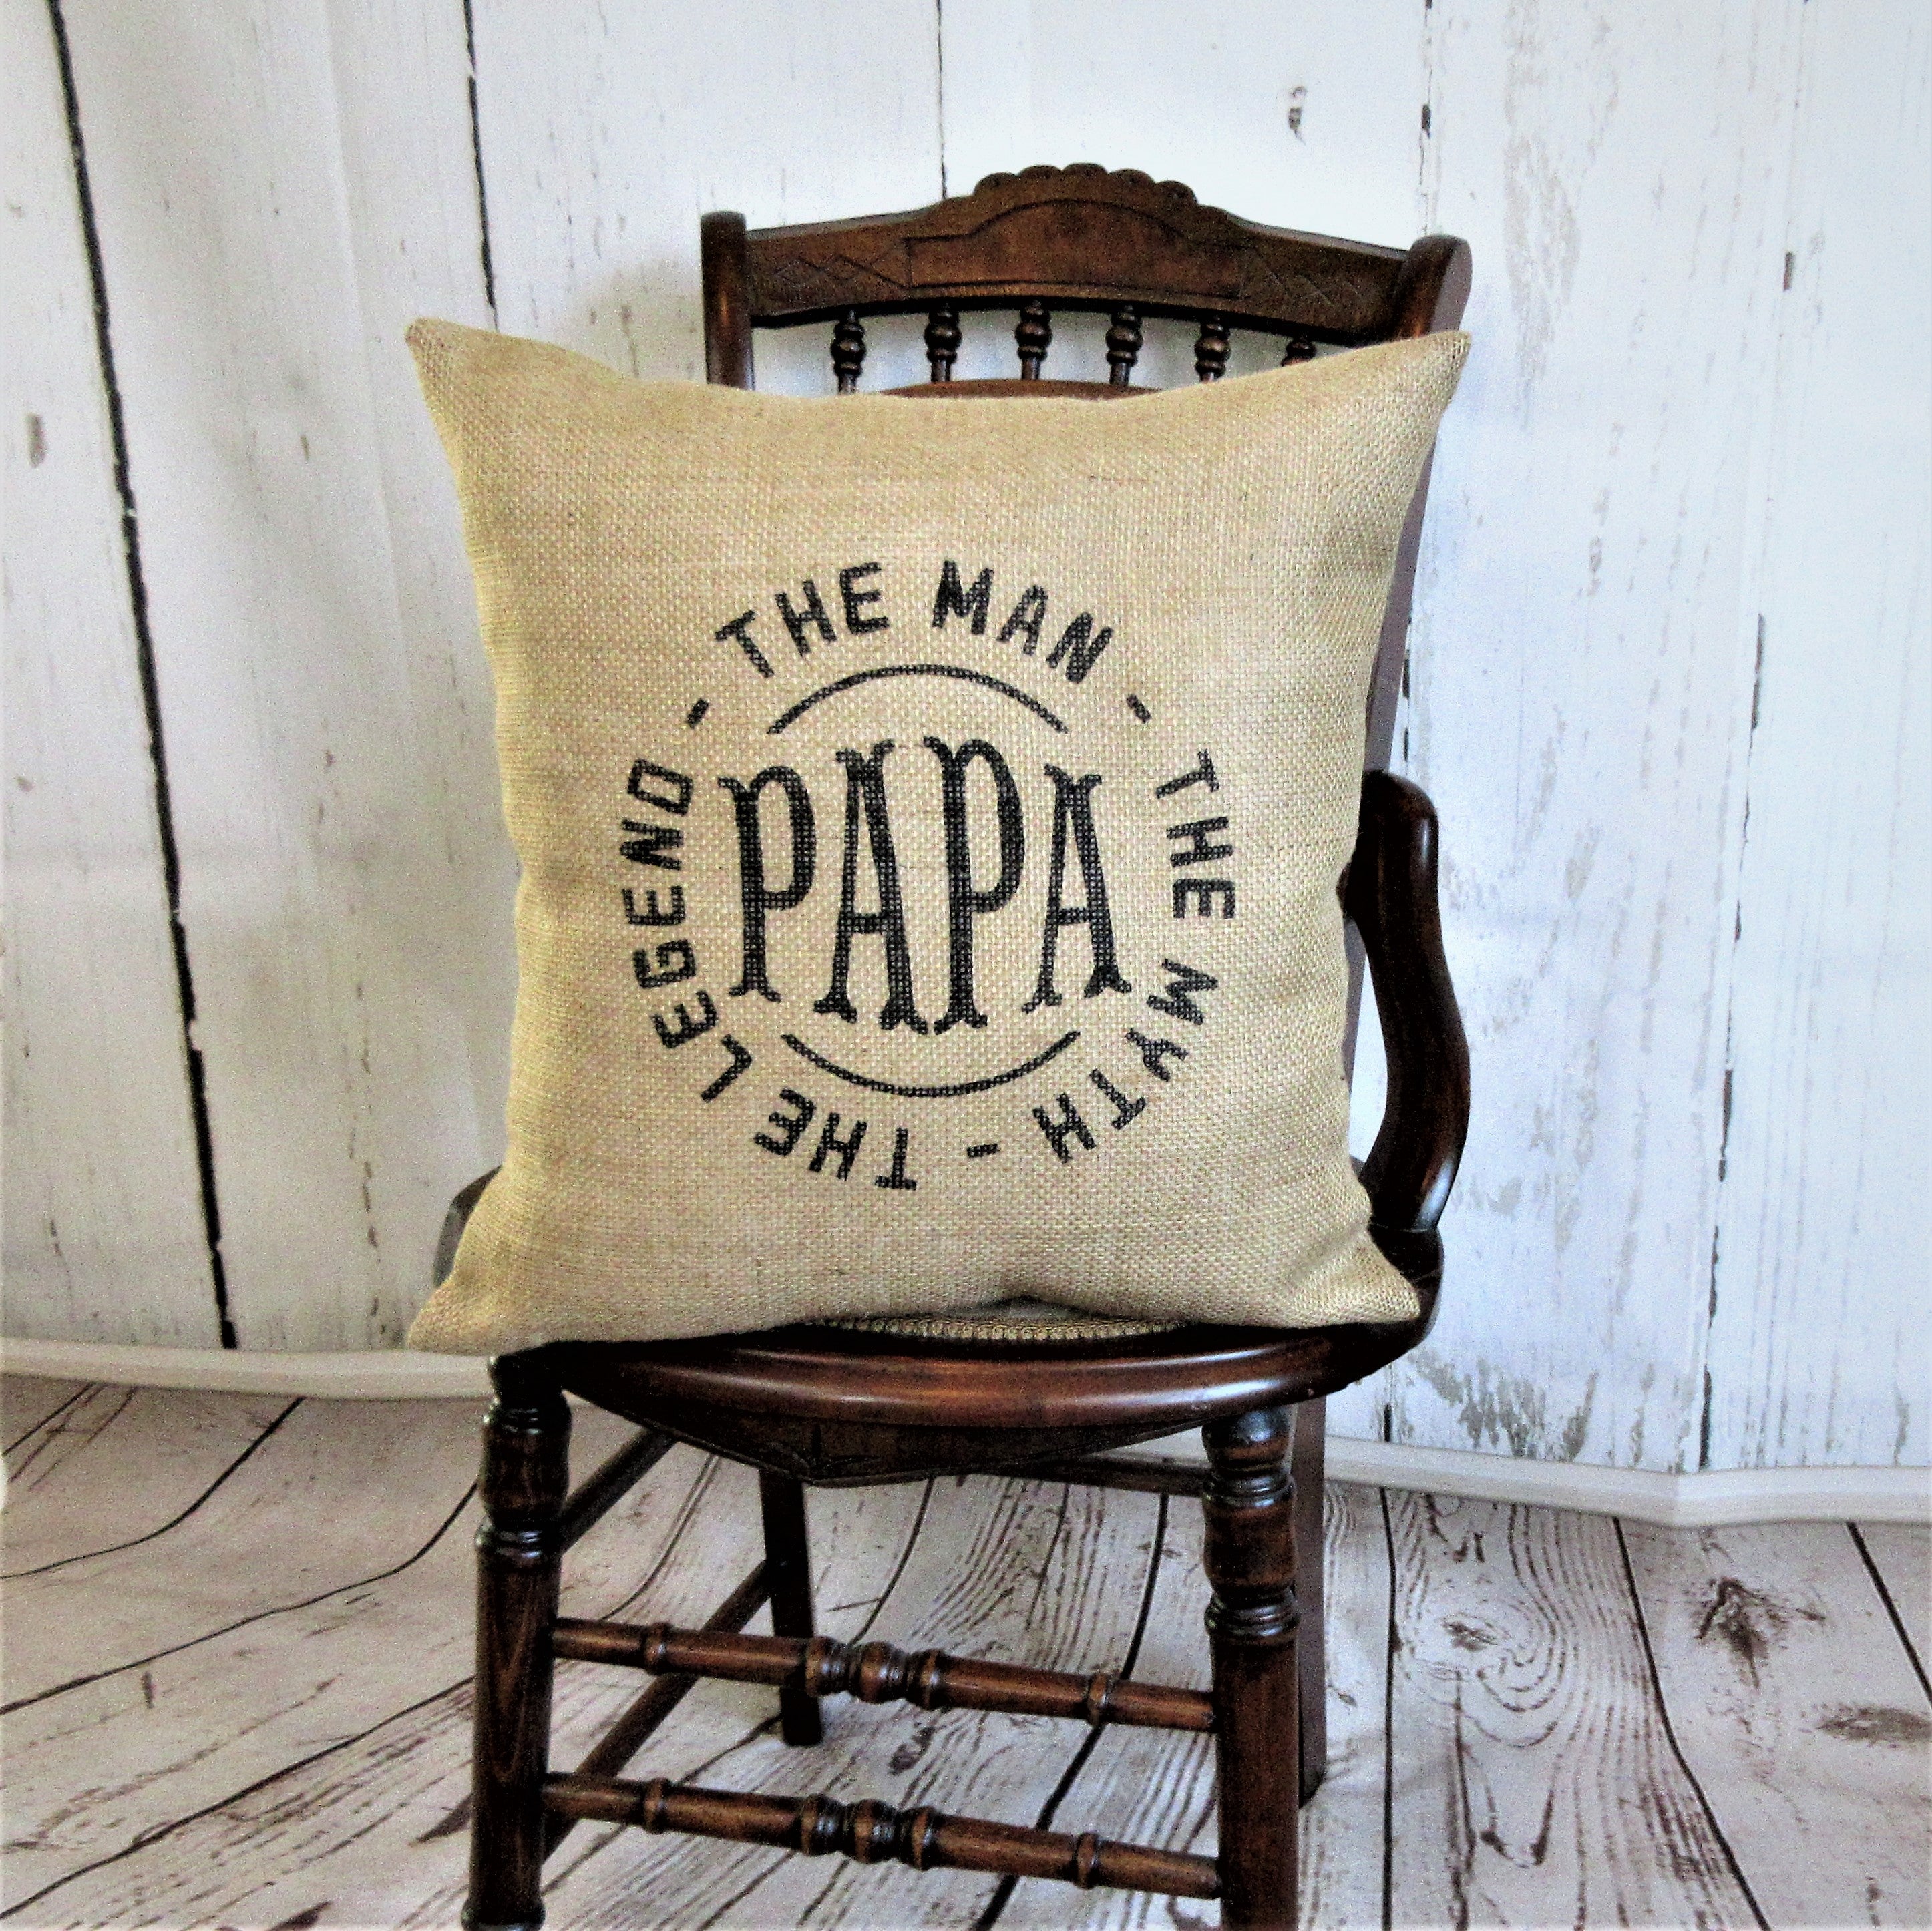 Papa Man Myth Legend Burlap pillow